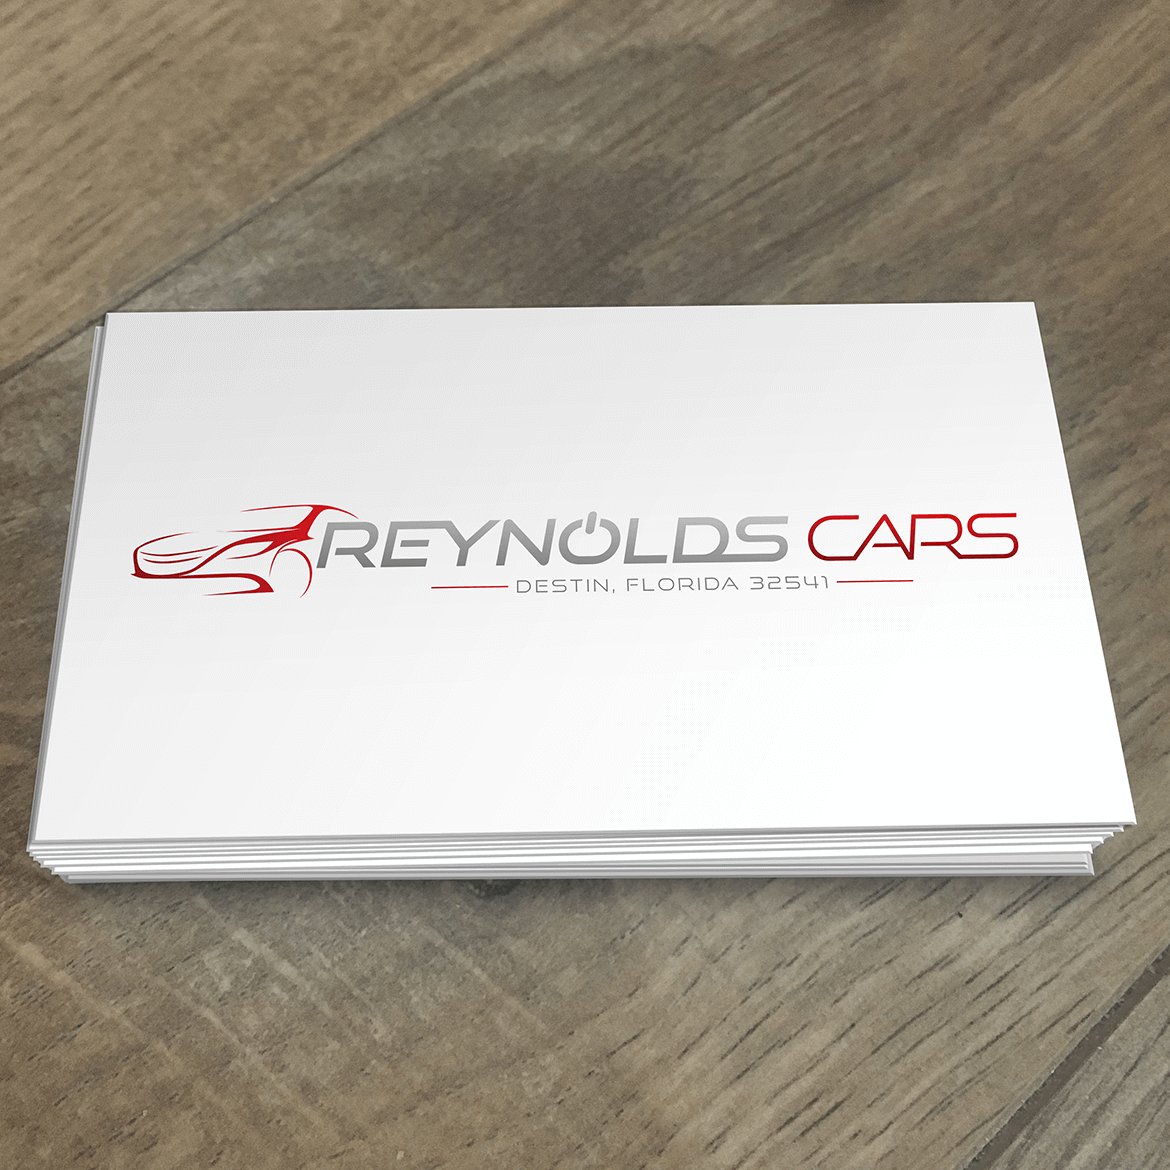 Reynolds Cars logo